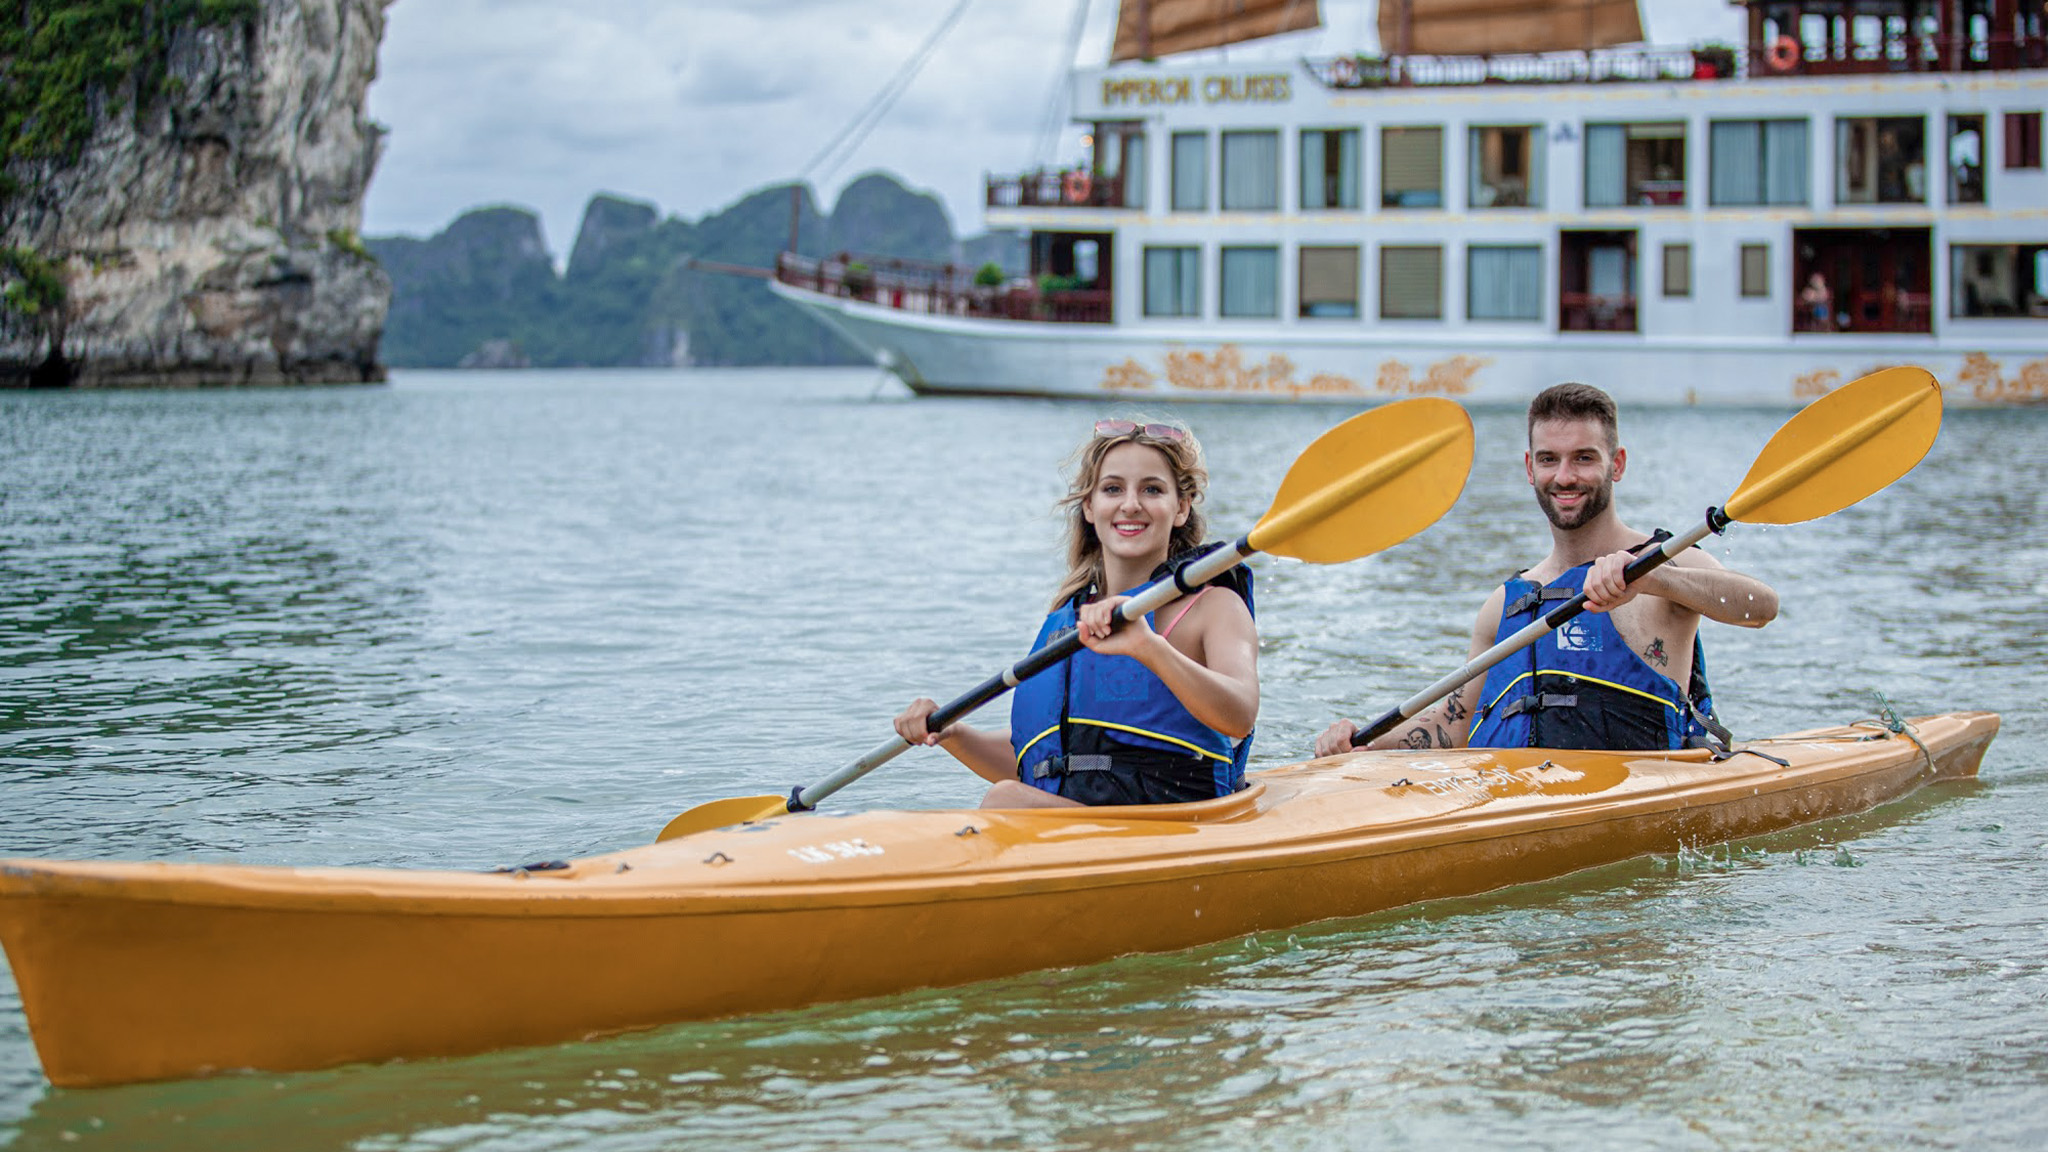 Enjoy the honeymoon vacation with kayaking